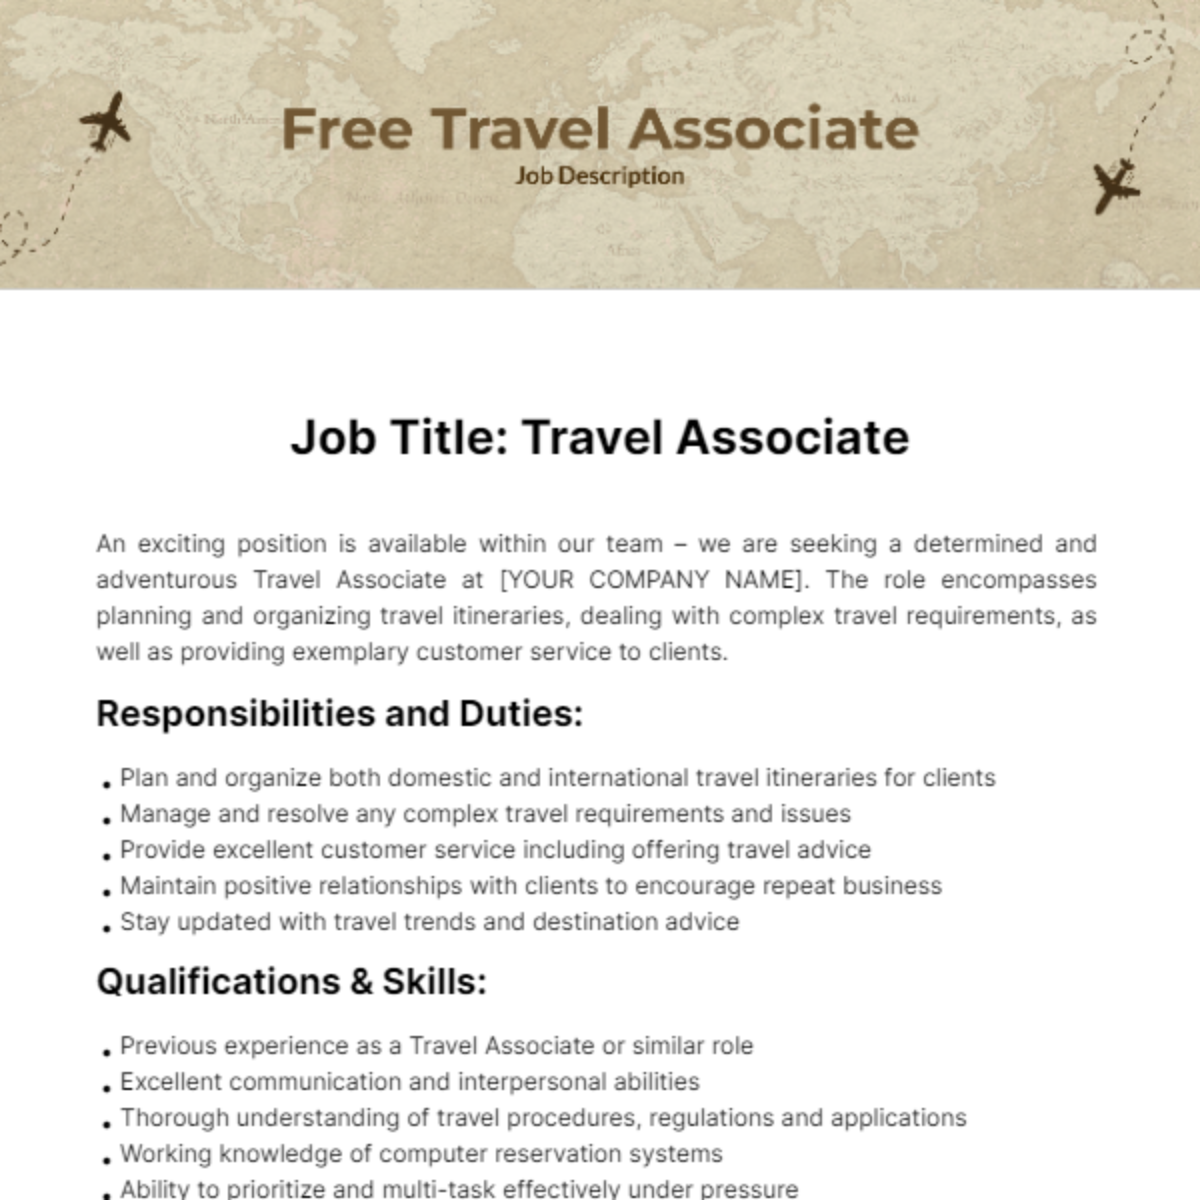 Free Travel Associate Job Description Template